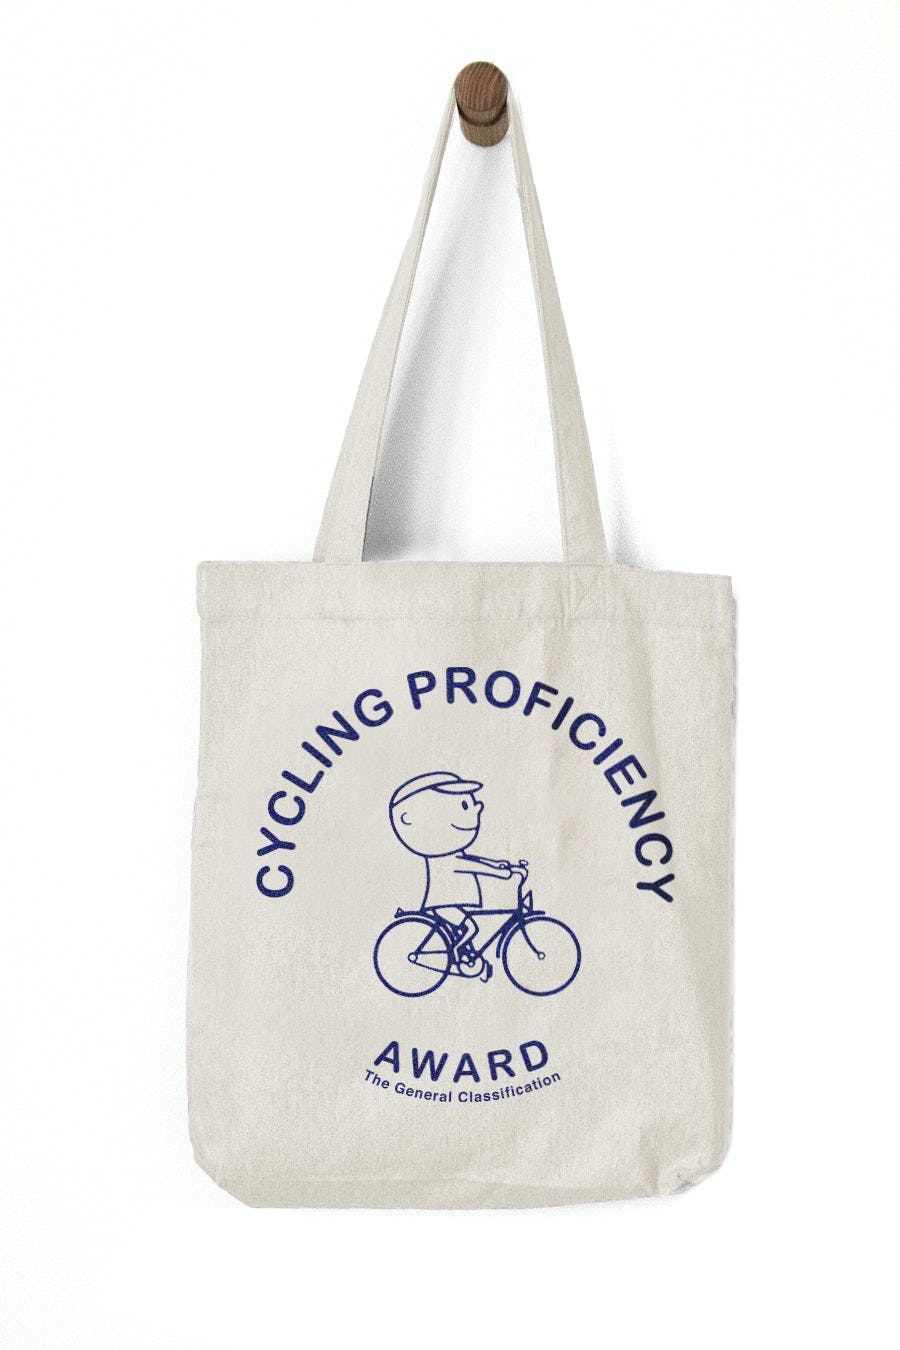 Cycling Proficiency Recycled Tote Bag Natural